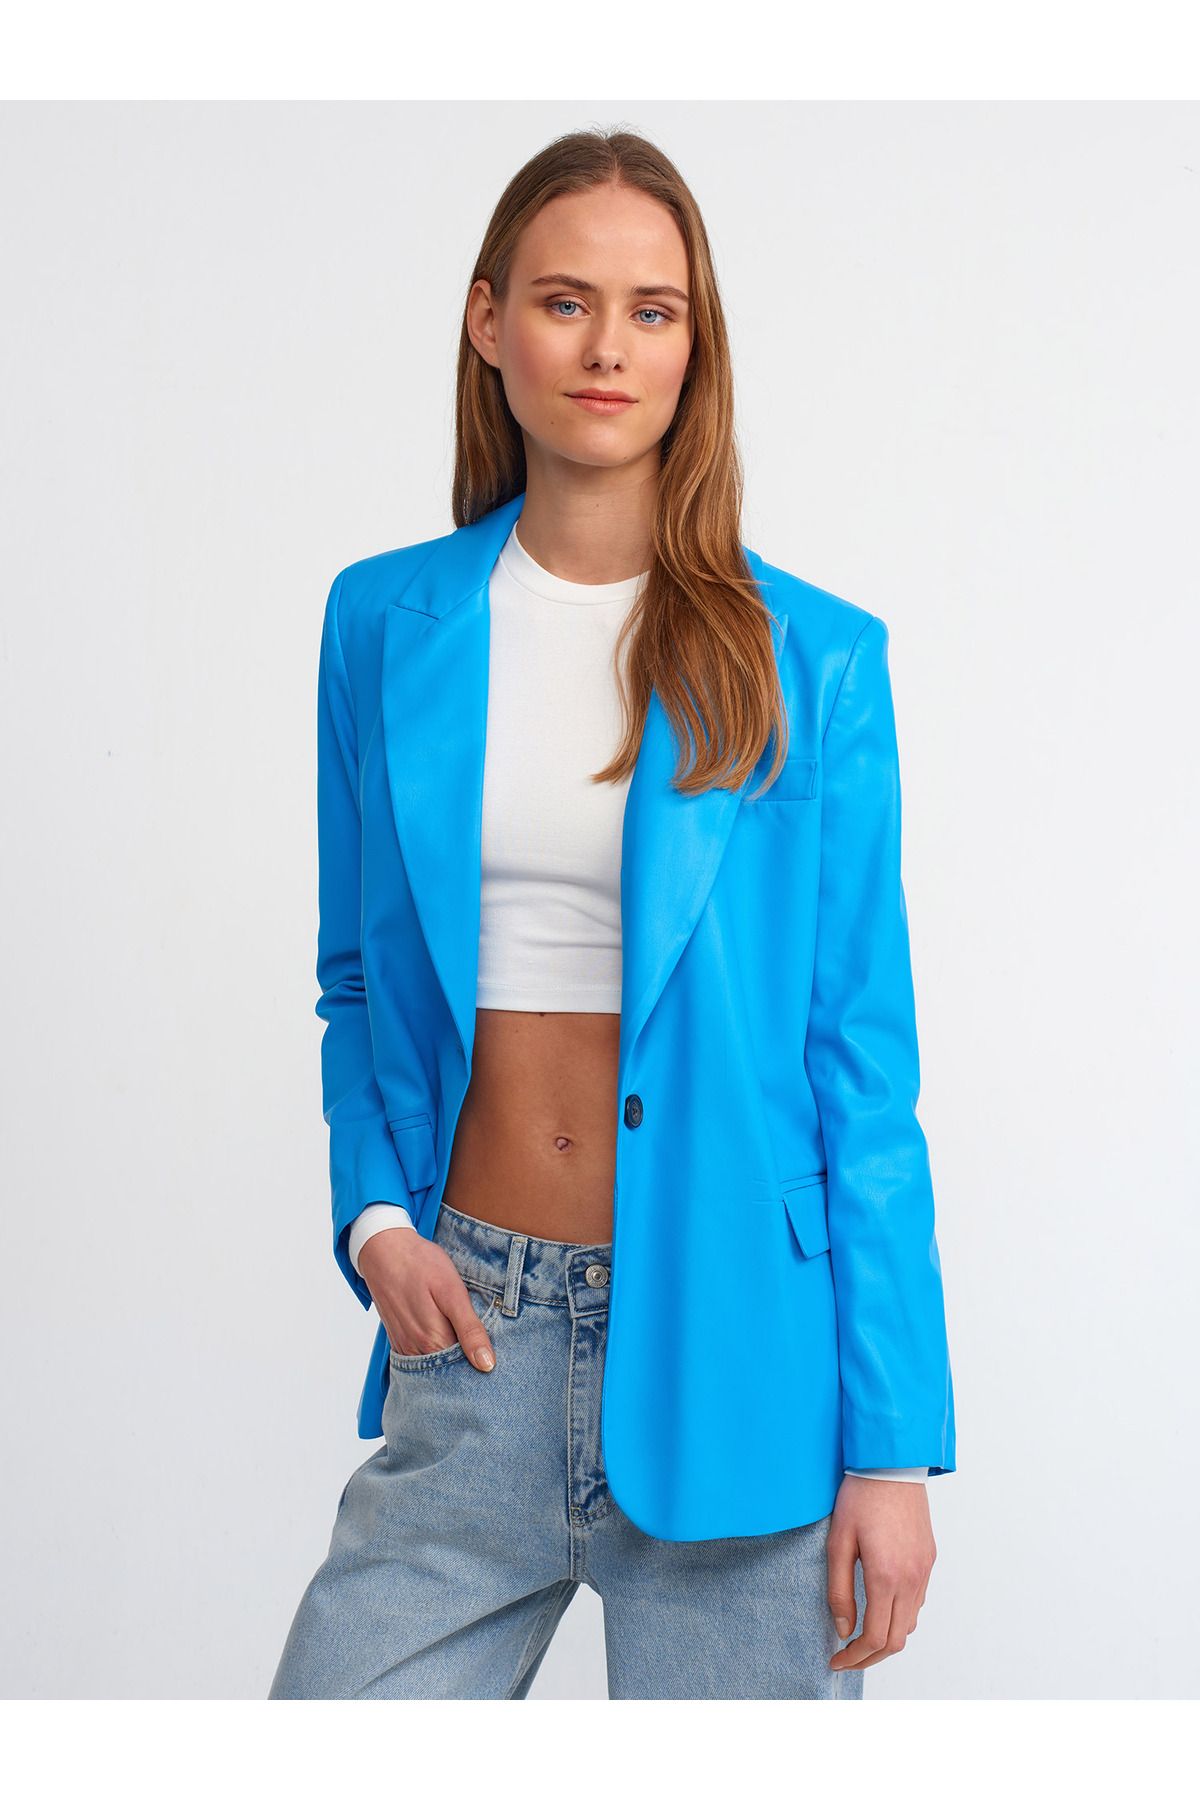 Zanvin Blazer Jackets for Women, Womens Fall Fashion Lapel Solid